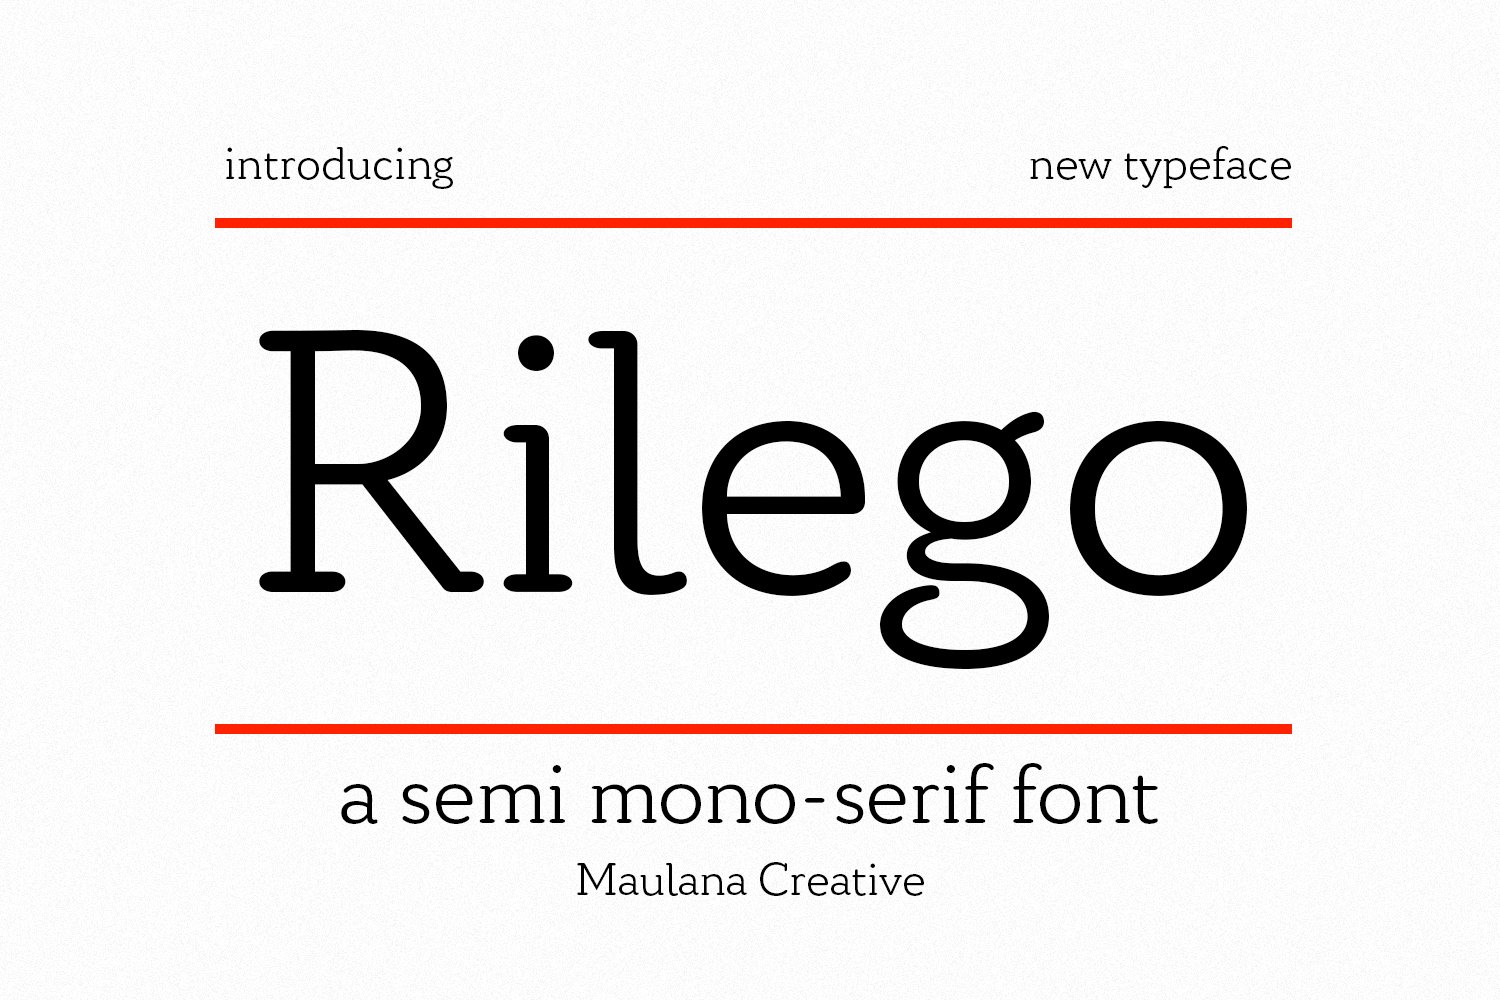 Rilego Serif Font cover image.